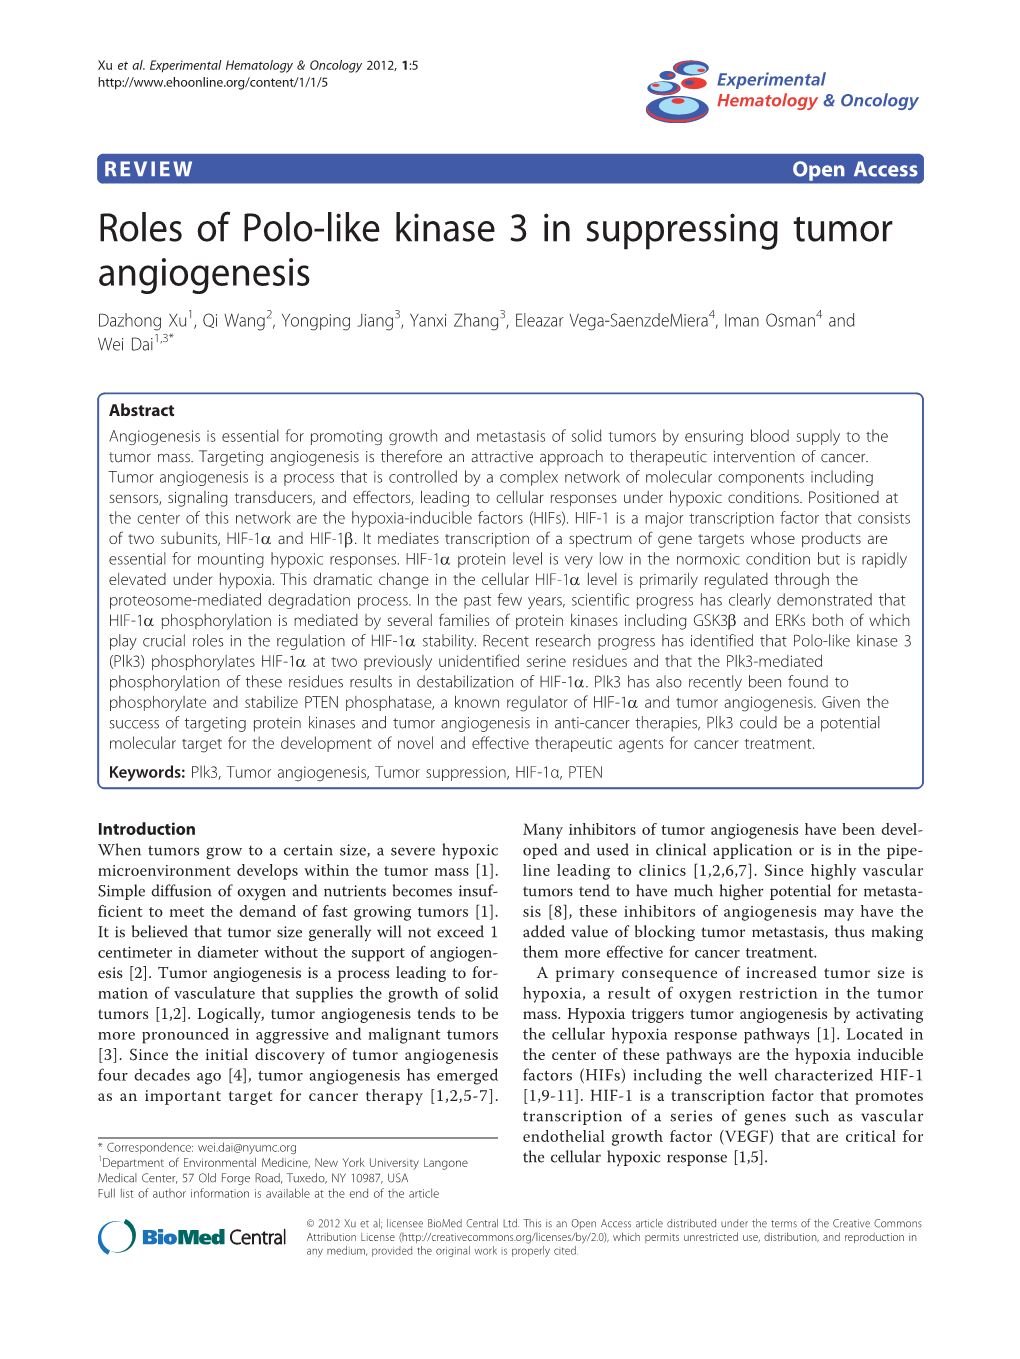 Roles of Polo-Like Kinase 3 in Suppressing Tumor Angiogenesis